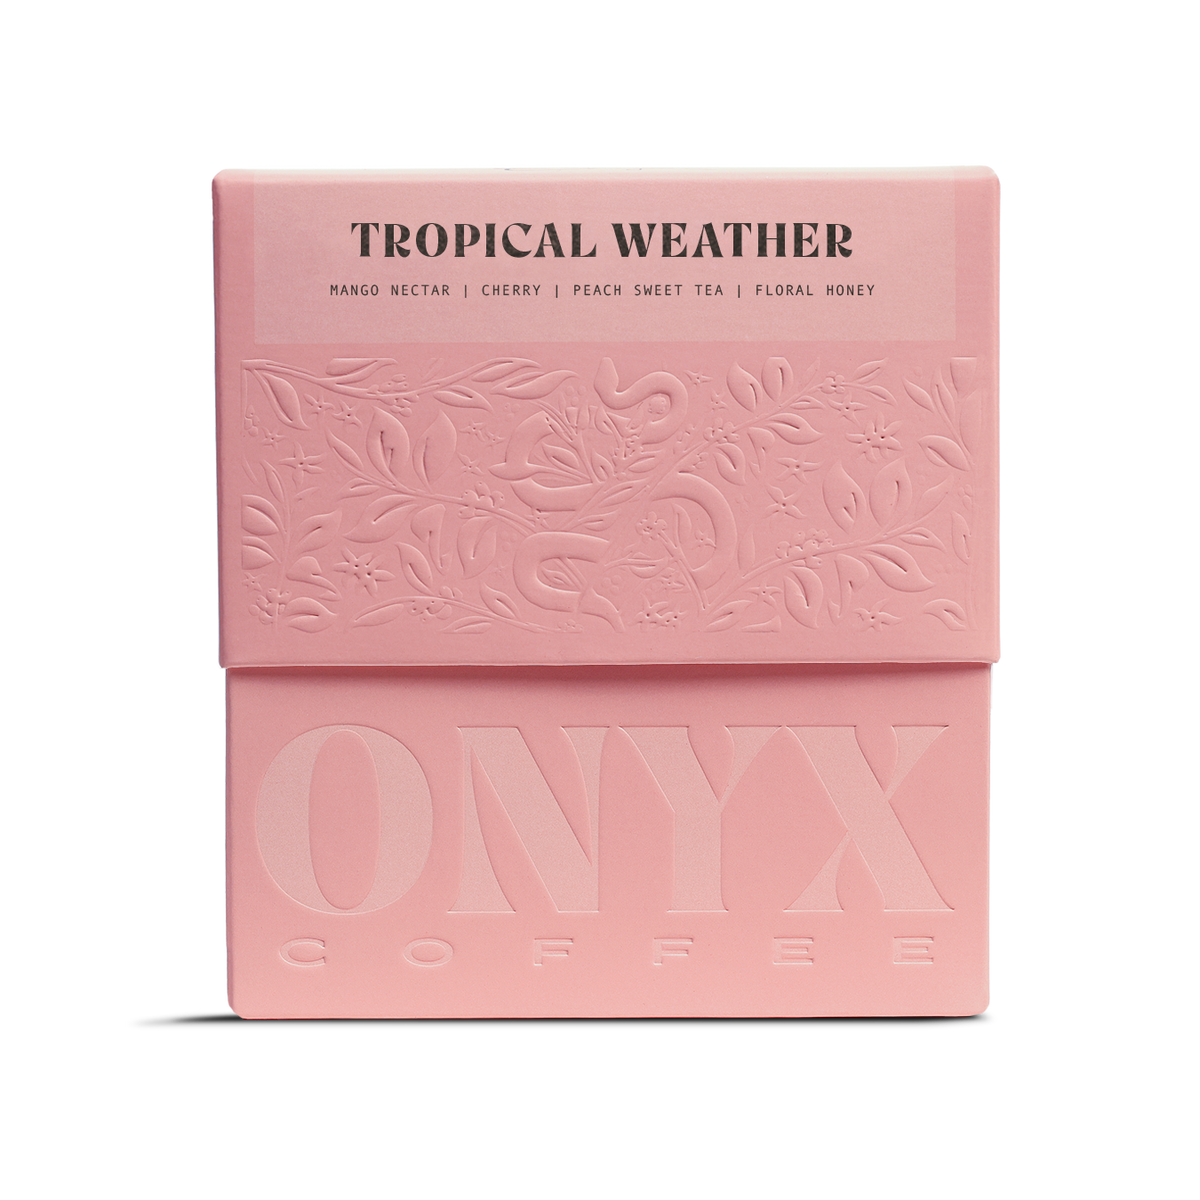 Tropical Weather by Onyx Coffee Lab